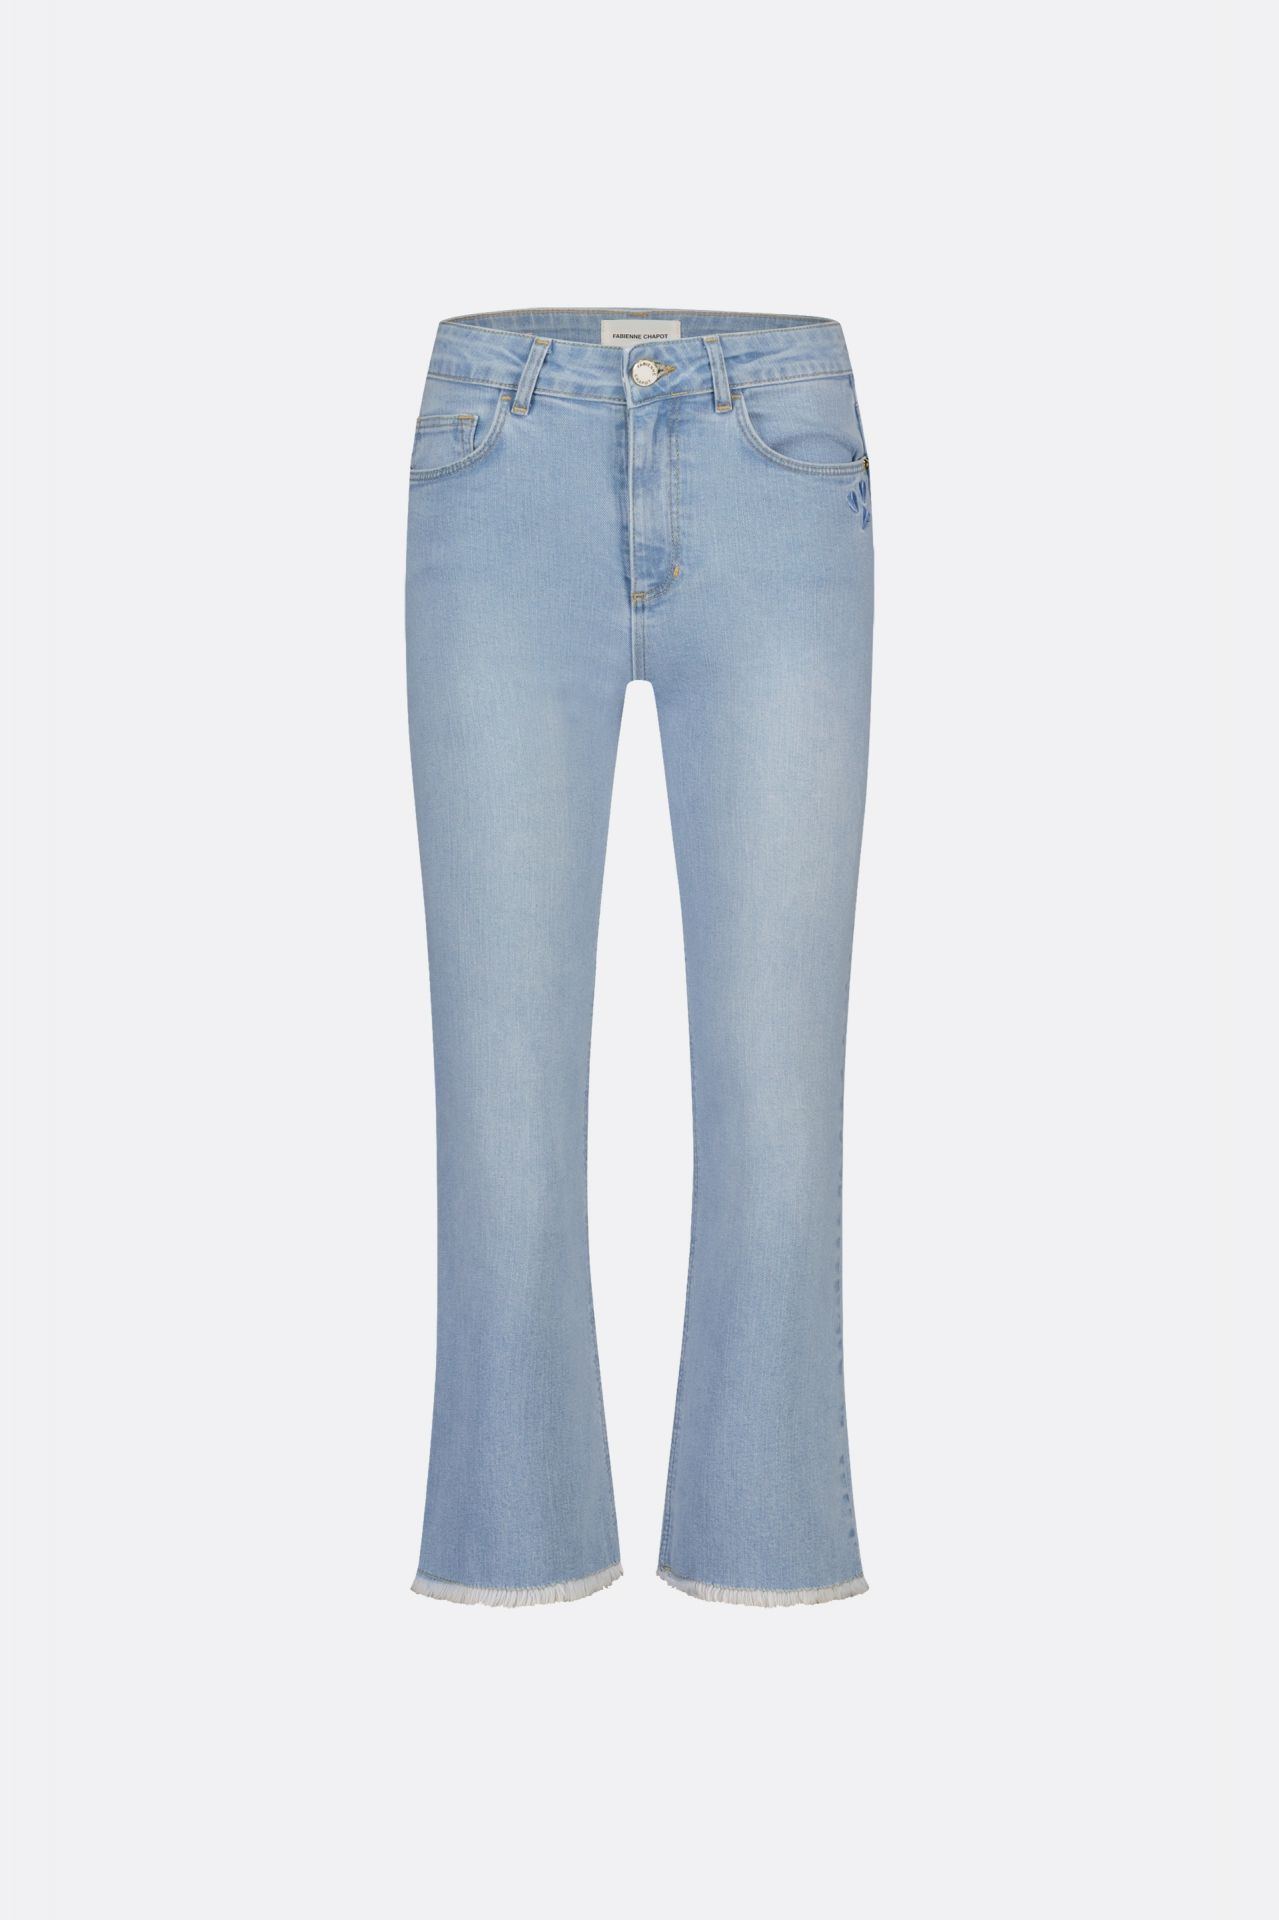 Lciht blauwe jeans - Fabienne Chapot - Lizzy cropped flare - light wash